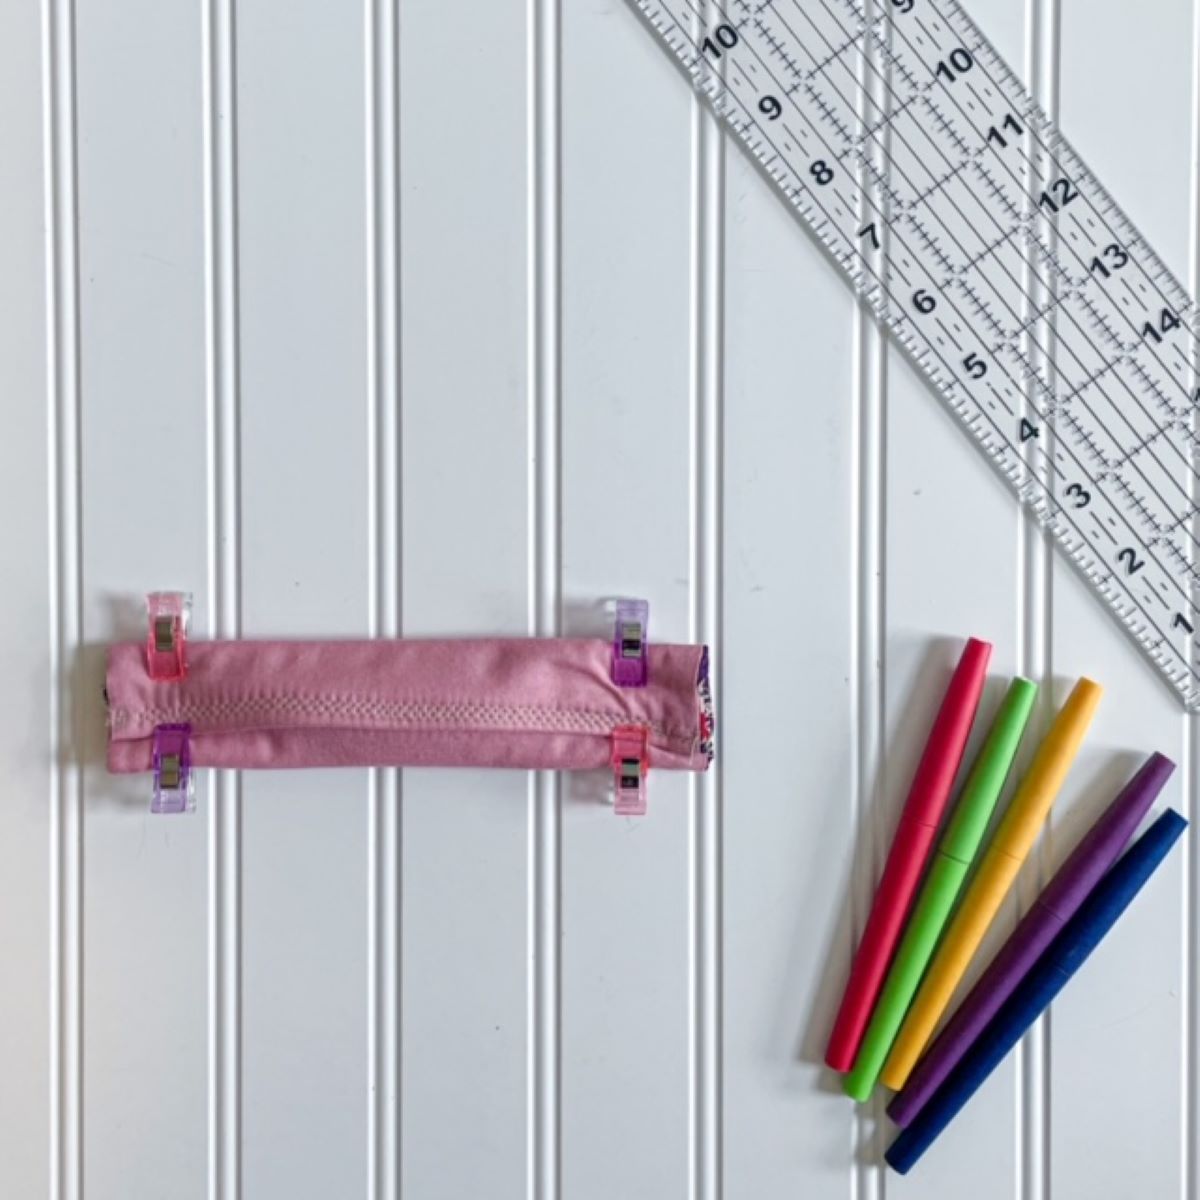 How to make a mini pencil pouch, diy slim pencil case